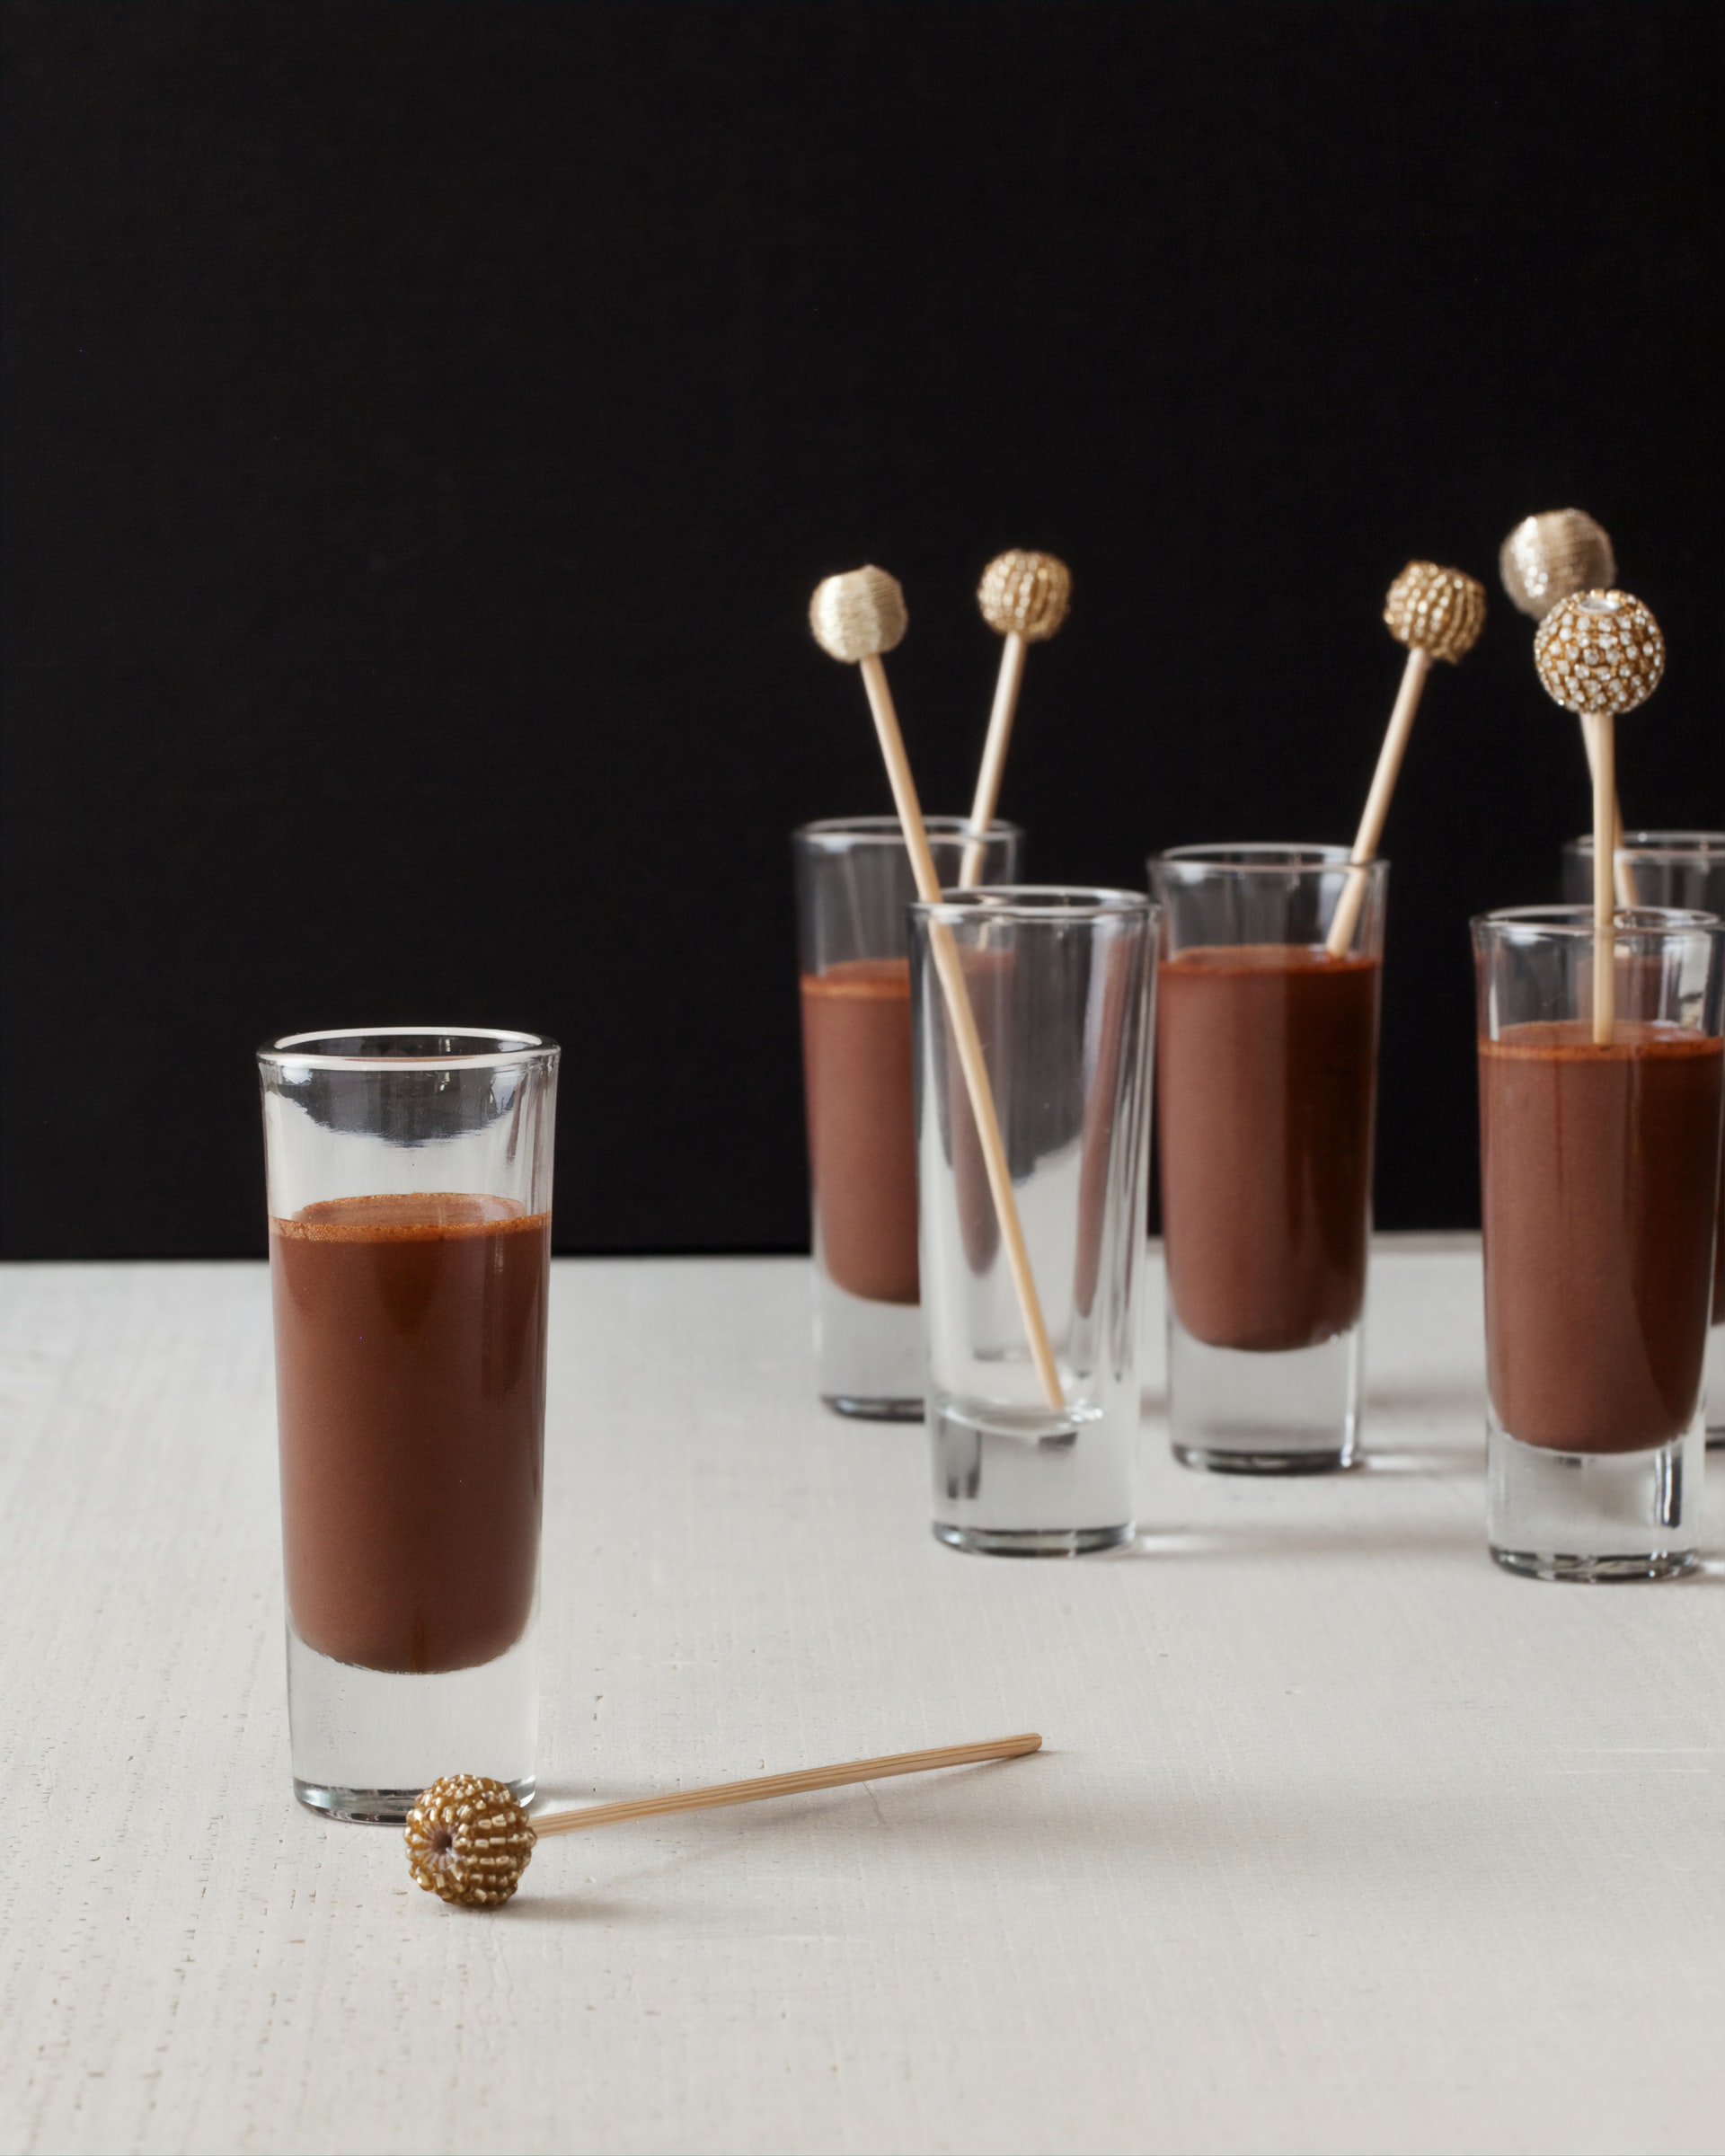 Chocolate RumChata pudding shots on a table.